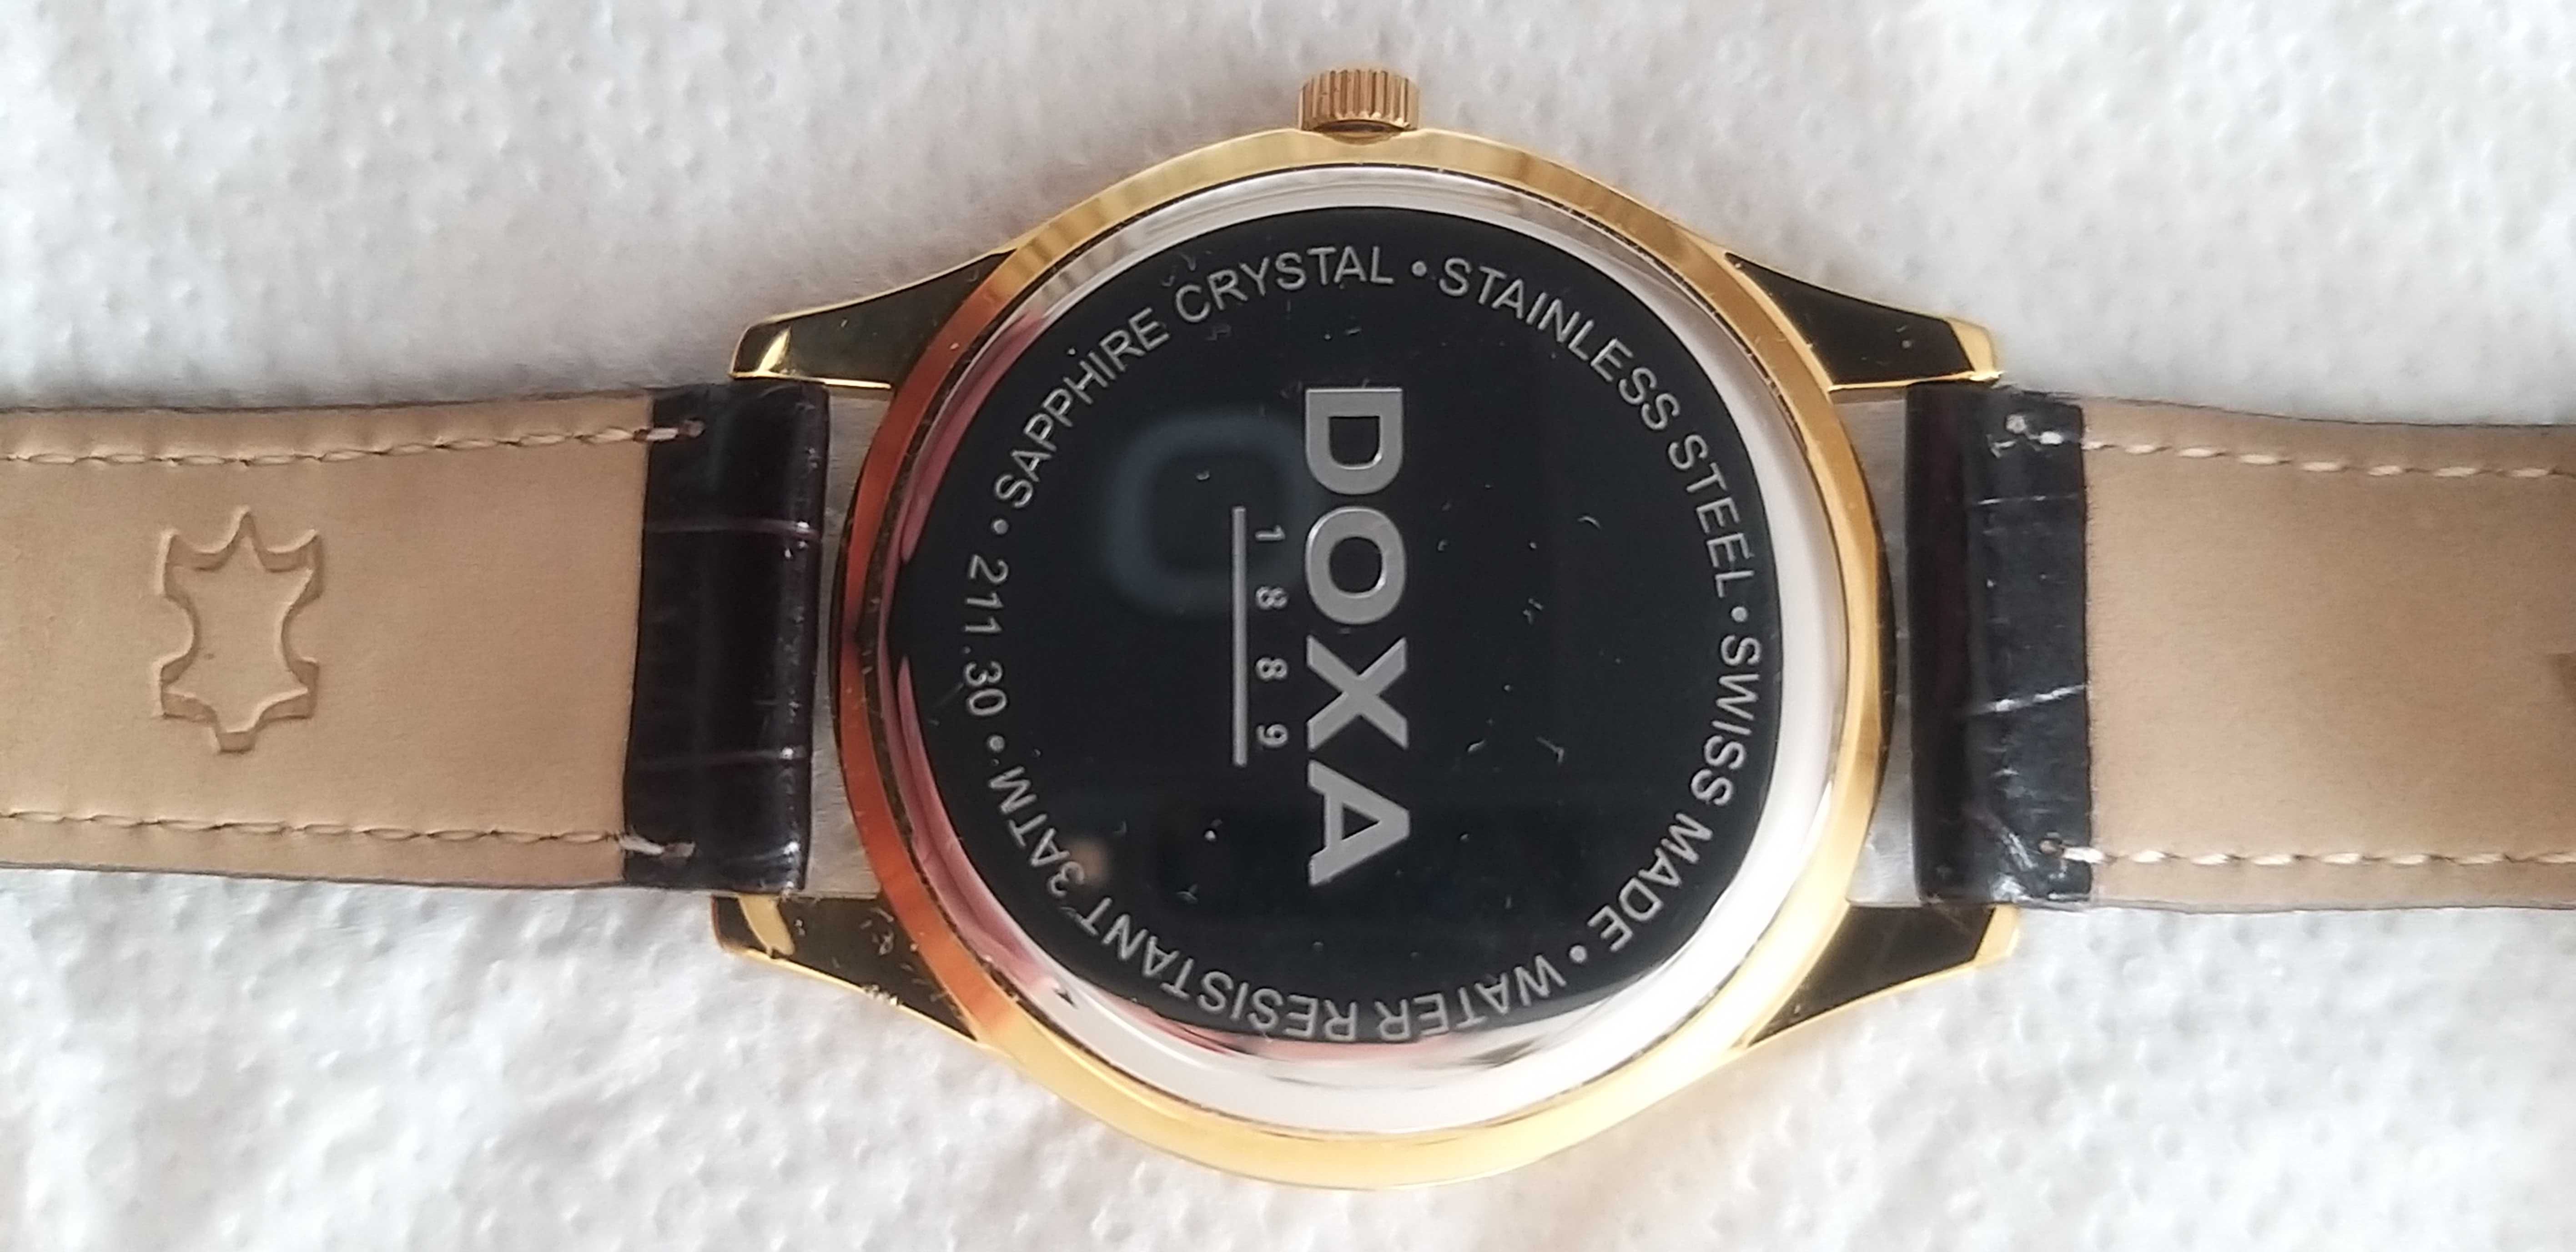 Zegarek Doxa 211.30 pozłacany.